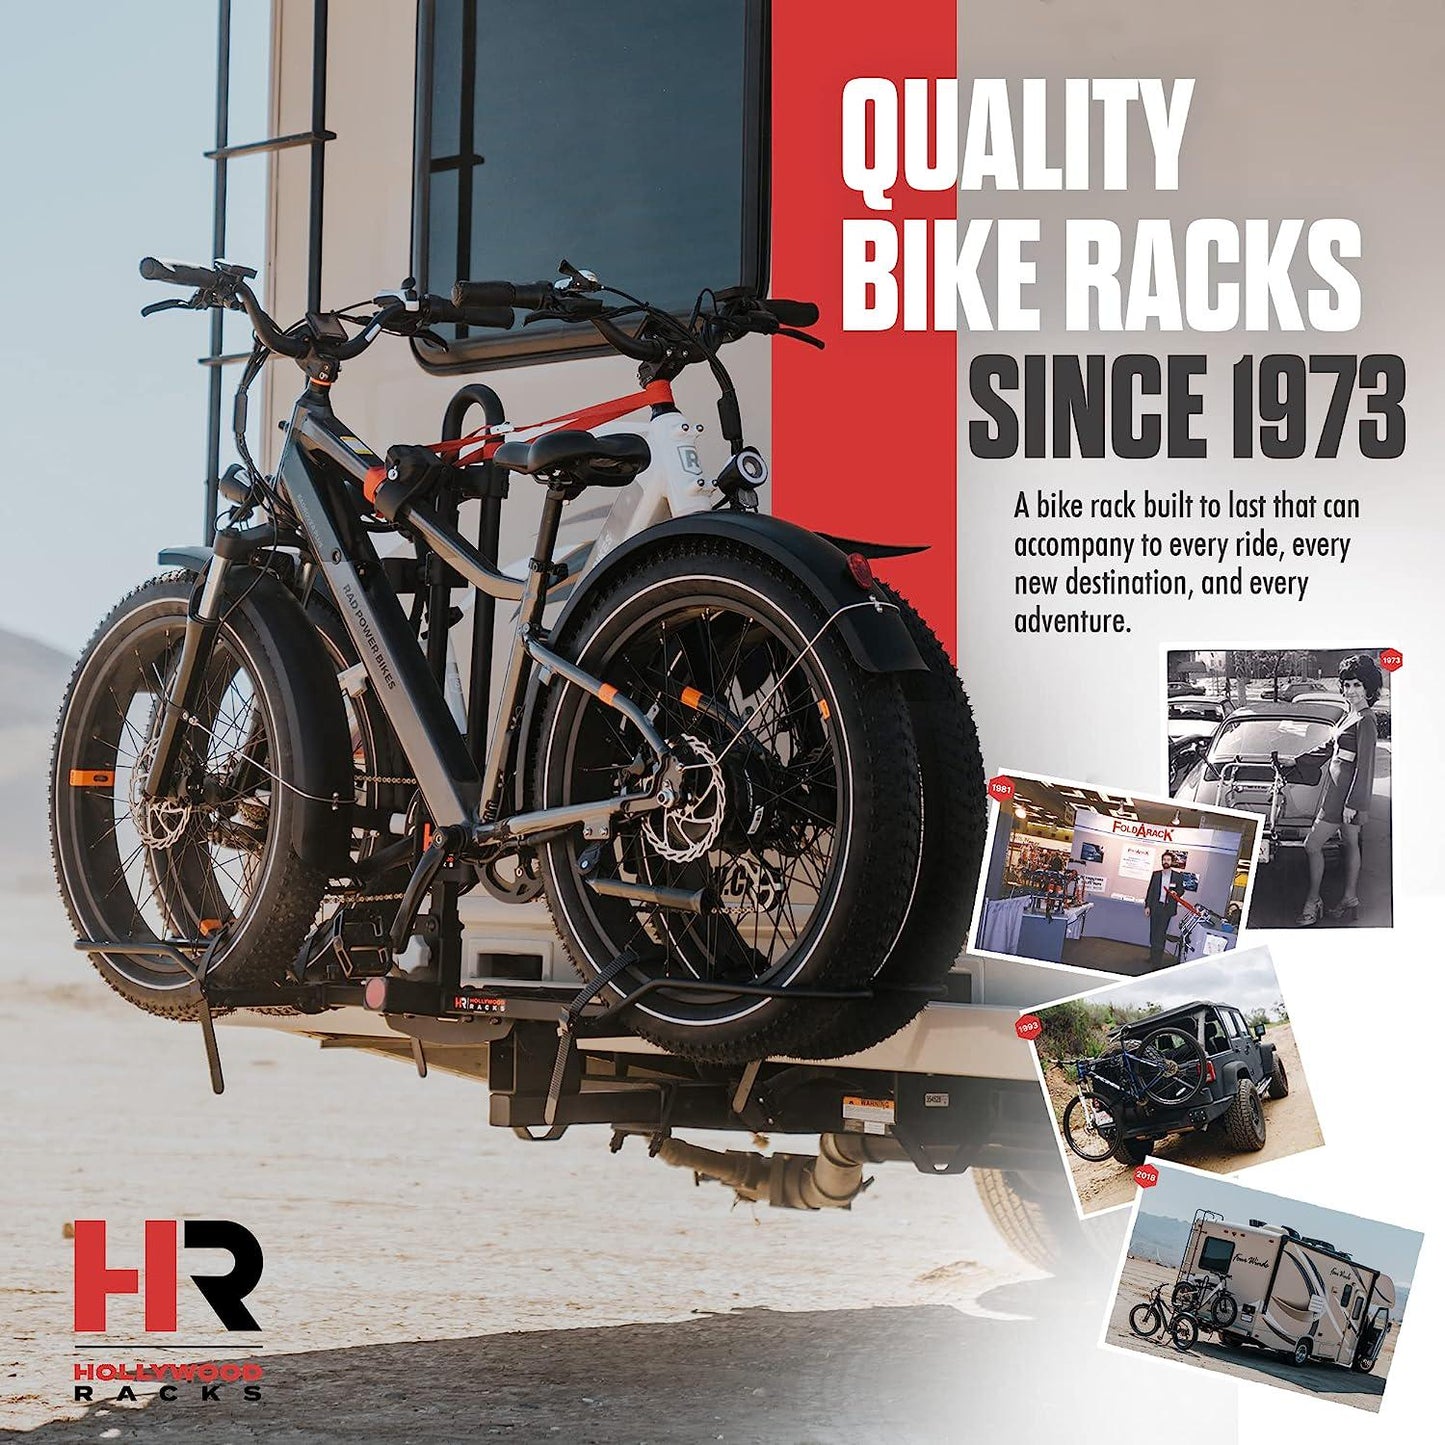 RV Rider Hitch Bike Rack for 2 E-Bikes up to 80 lbs Each - Premium Electric Bike Rack for RV, Fifth Wheel, Flat Towed Vehicle - Durable EBike Rack